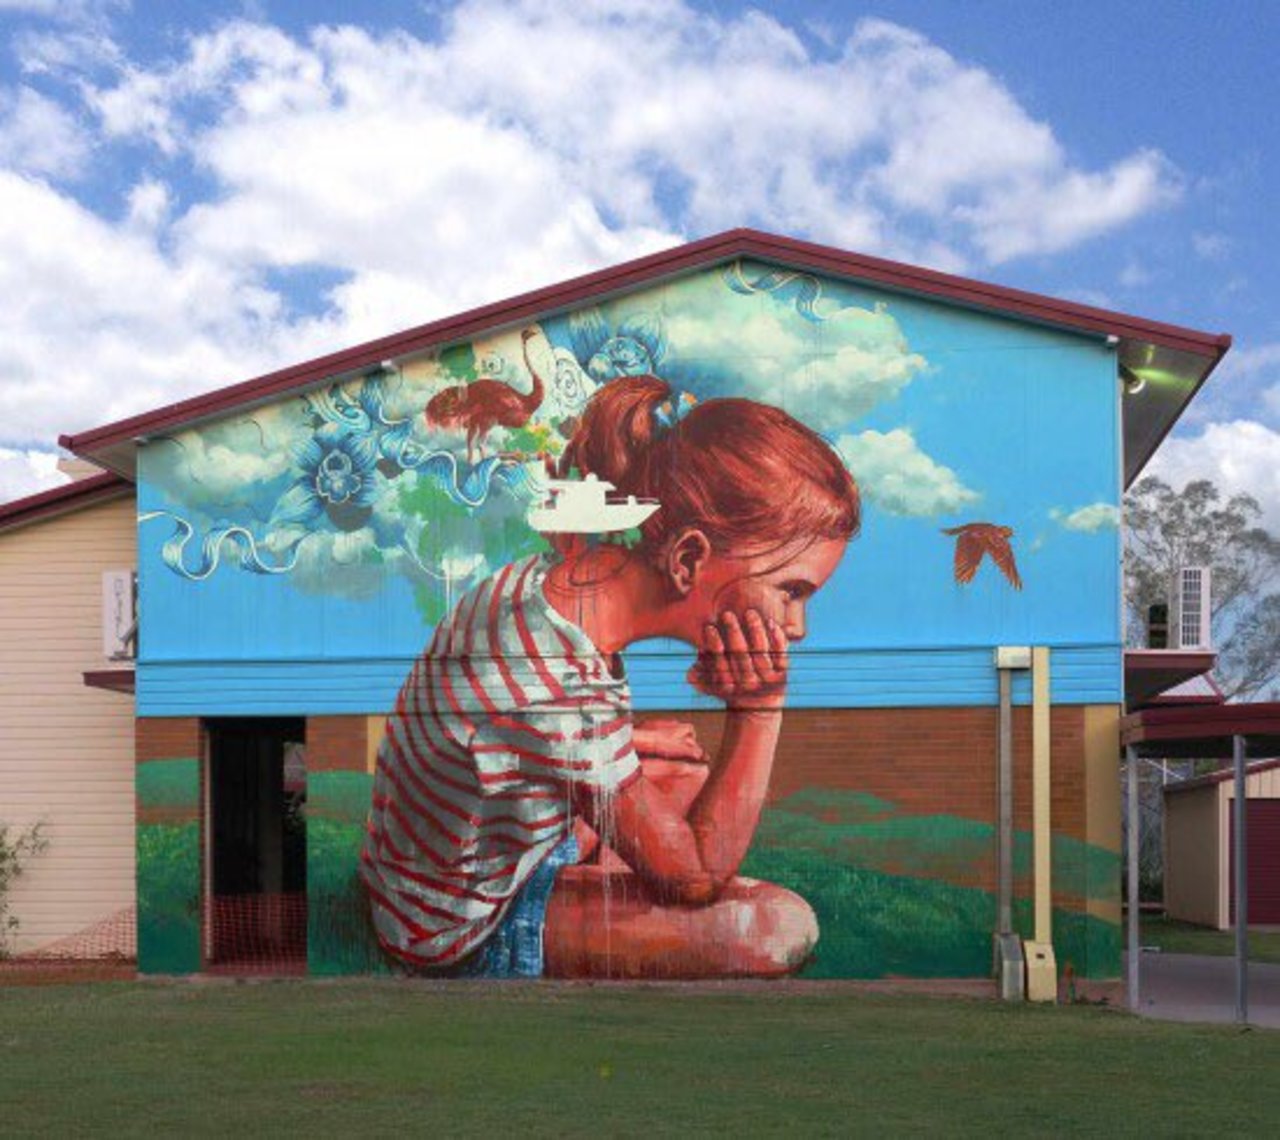 Mural by Fintan Magee #Rockhampton #australia # mural #art #graffiti #streetart #urbanart https://t.co/K752hOm5W8